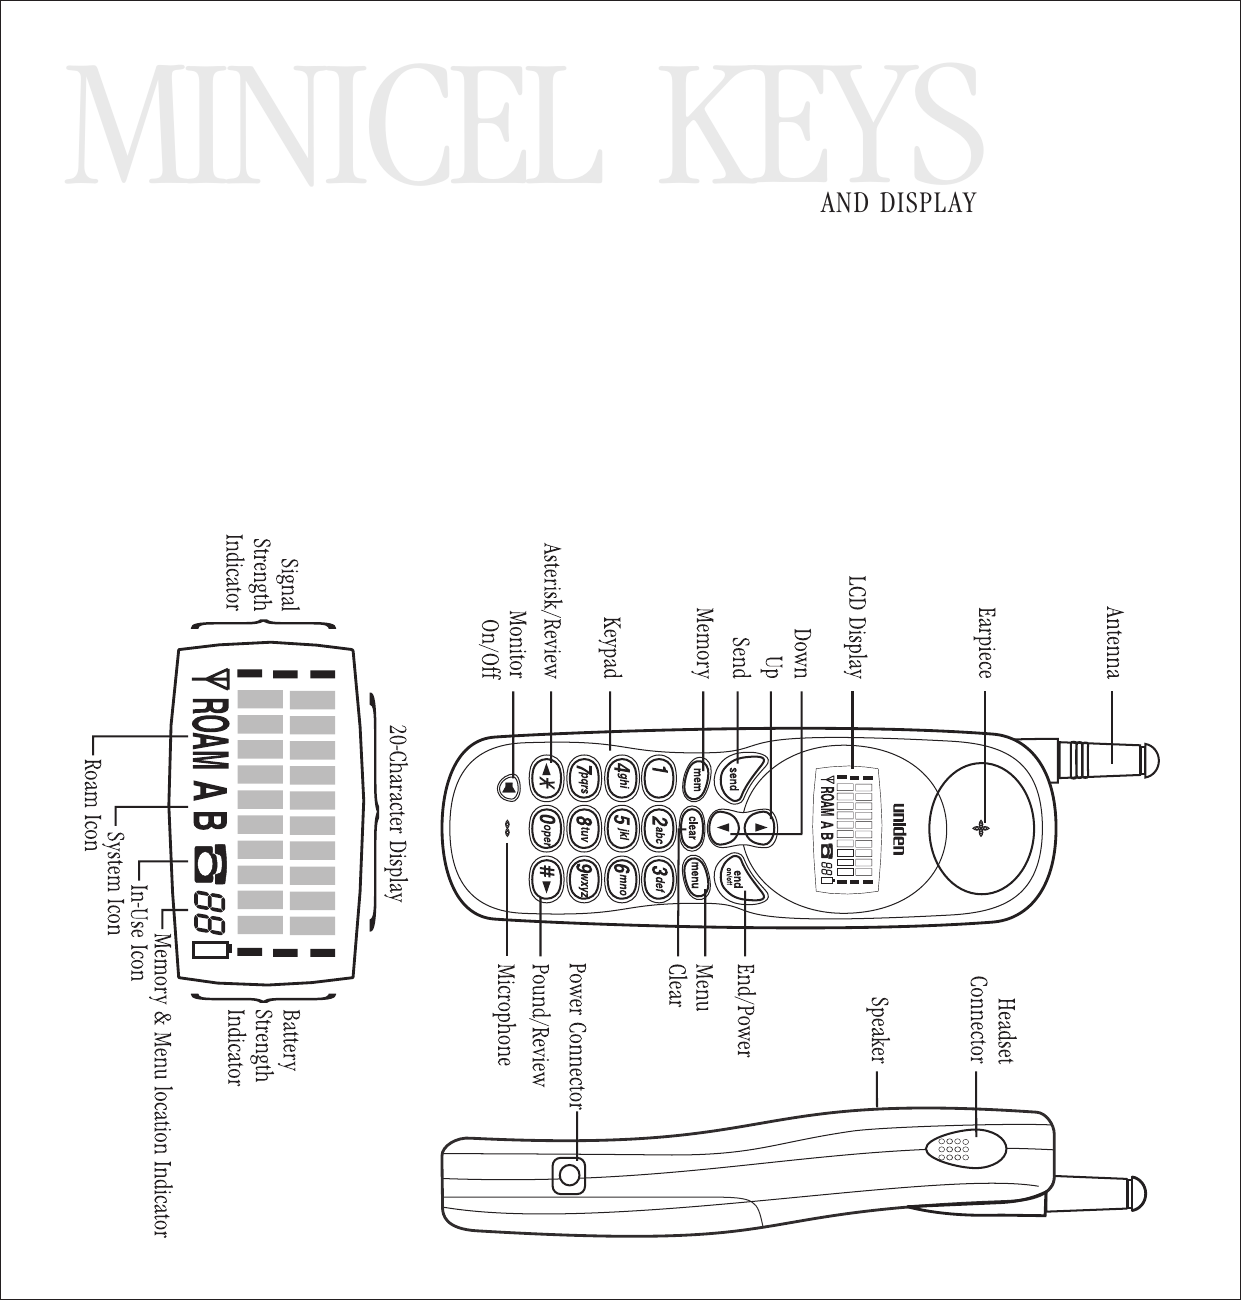 Keys and DisplayMINICEL KEYSAND DISPLAY